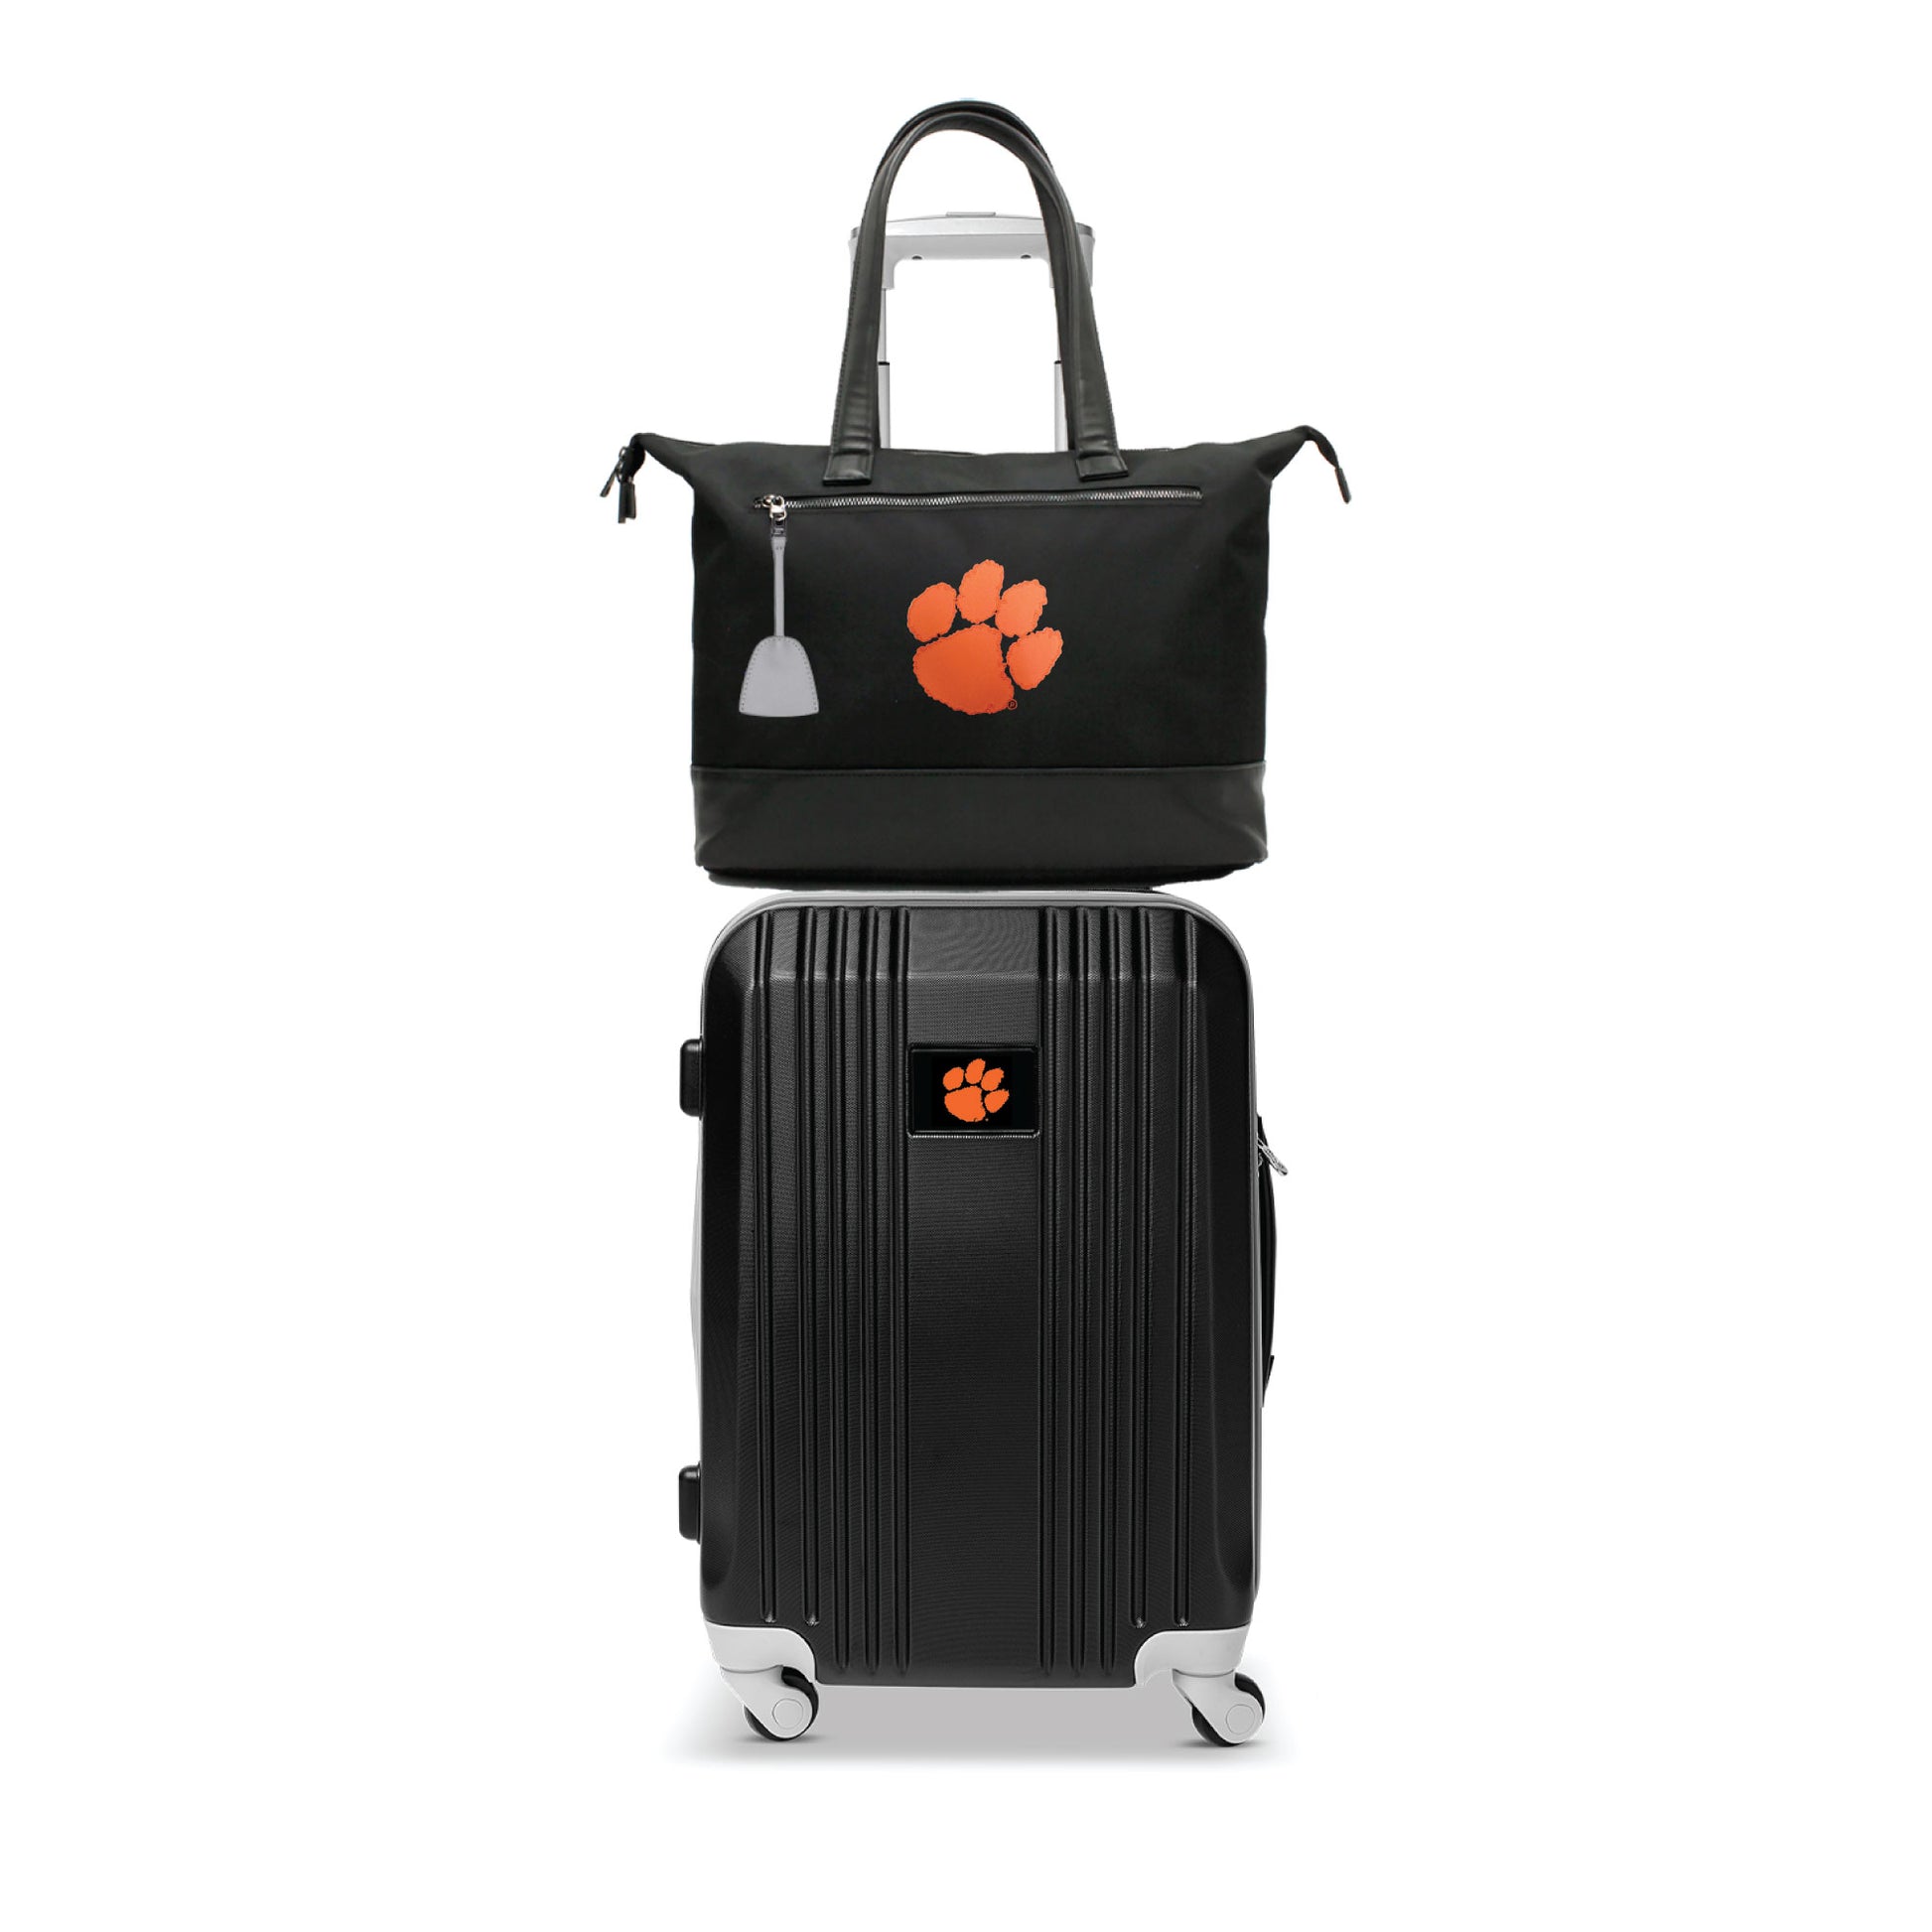 Clemson Tigers Premium Laptop Tote Bag and Luggage Set